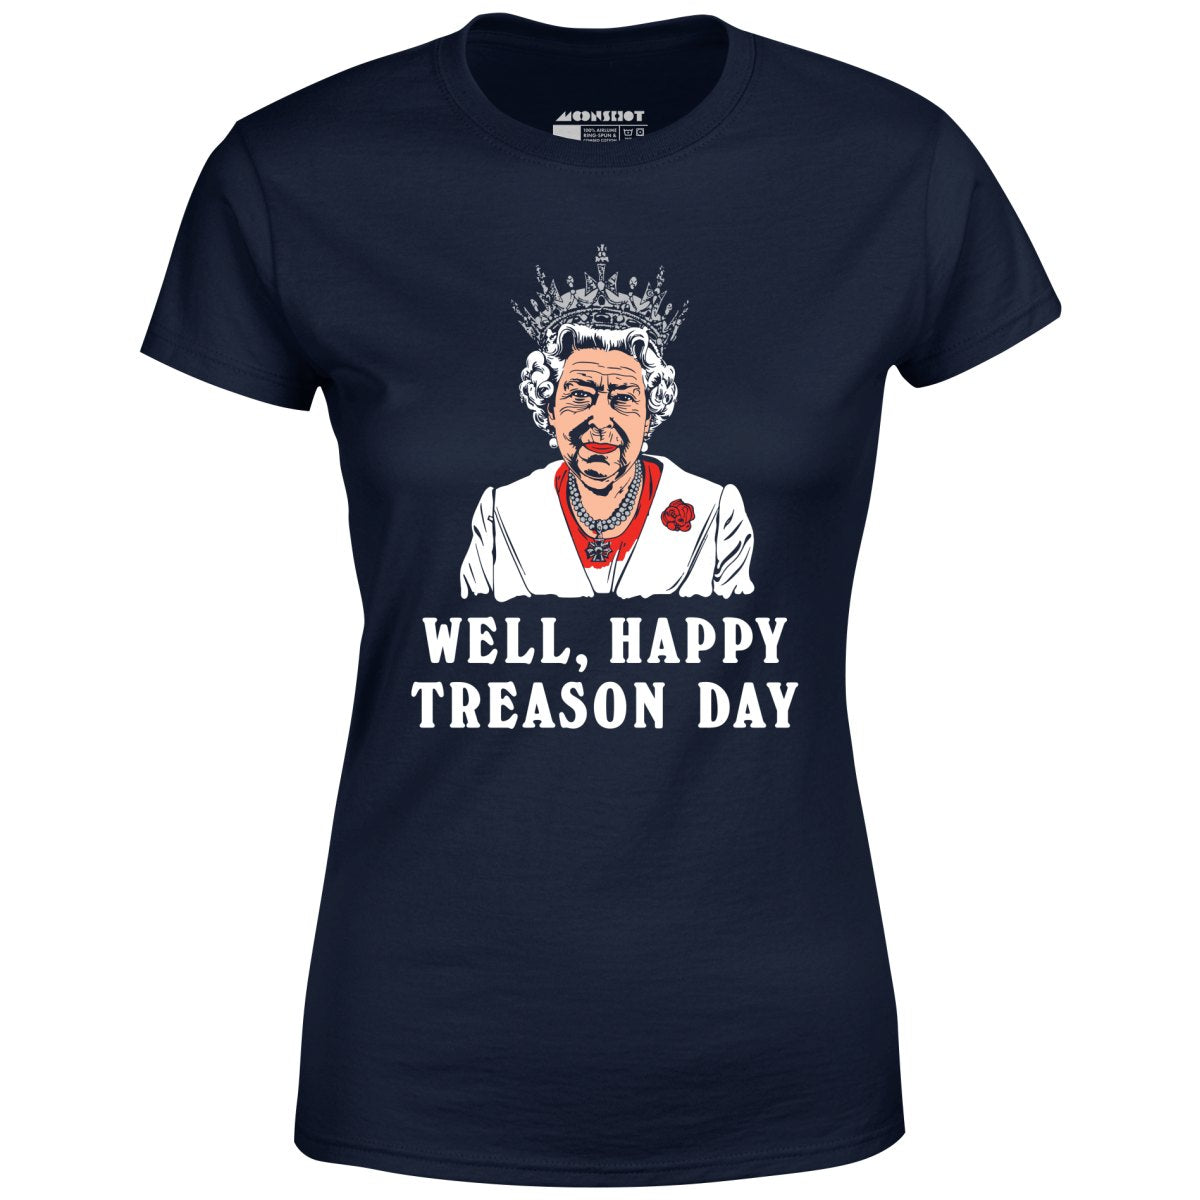 Well, Happy Treason Day - Women's T-Shirt